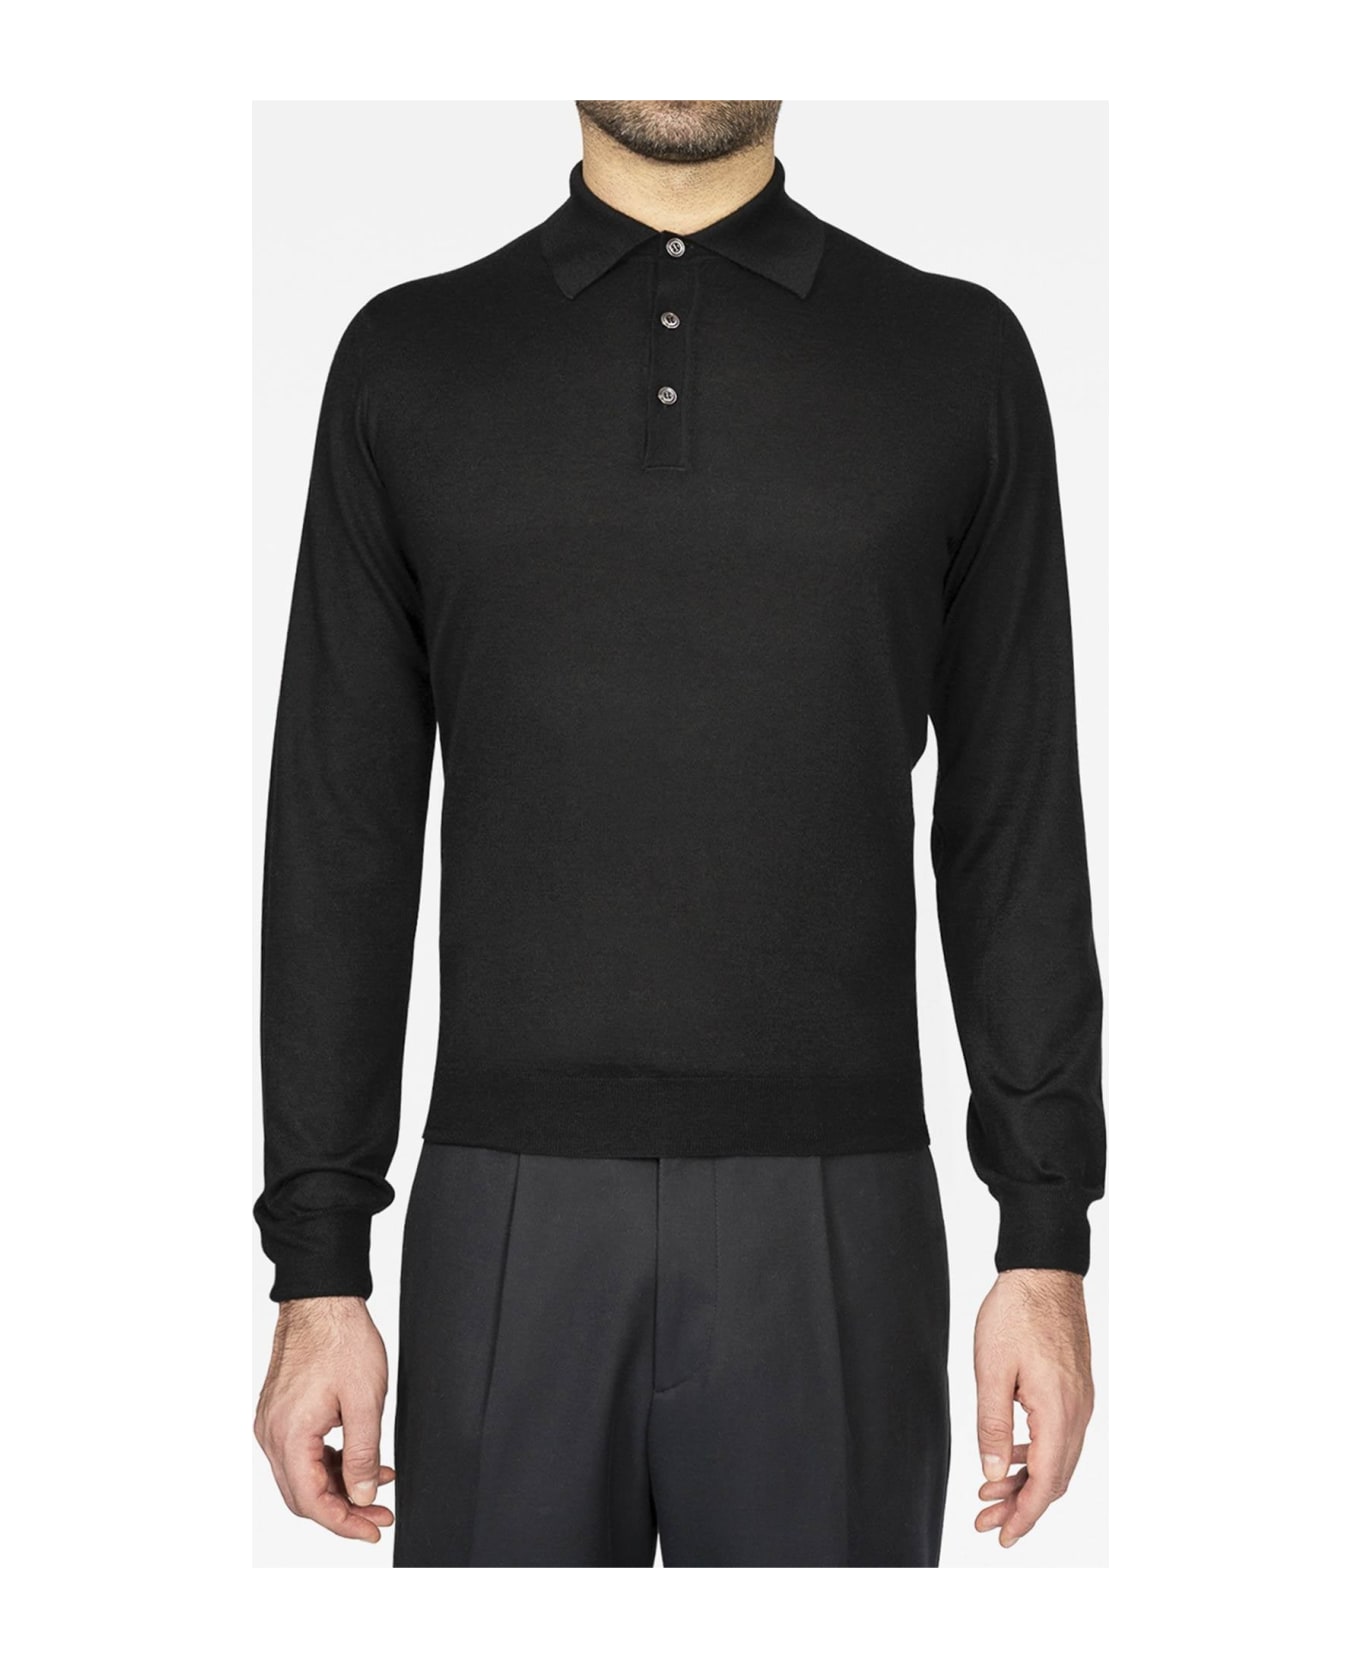 Larusmiani Long Sleeve Polo 'coppa Europa' Sweater - Black